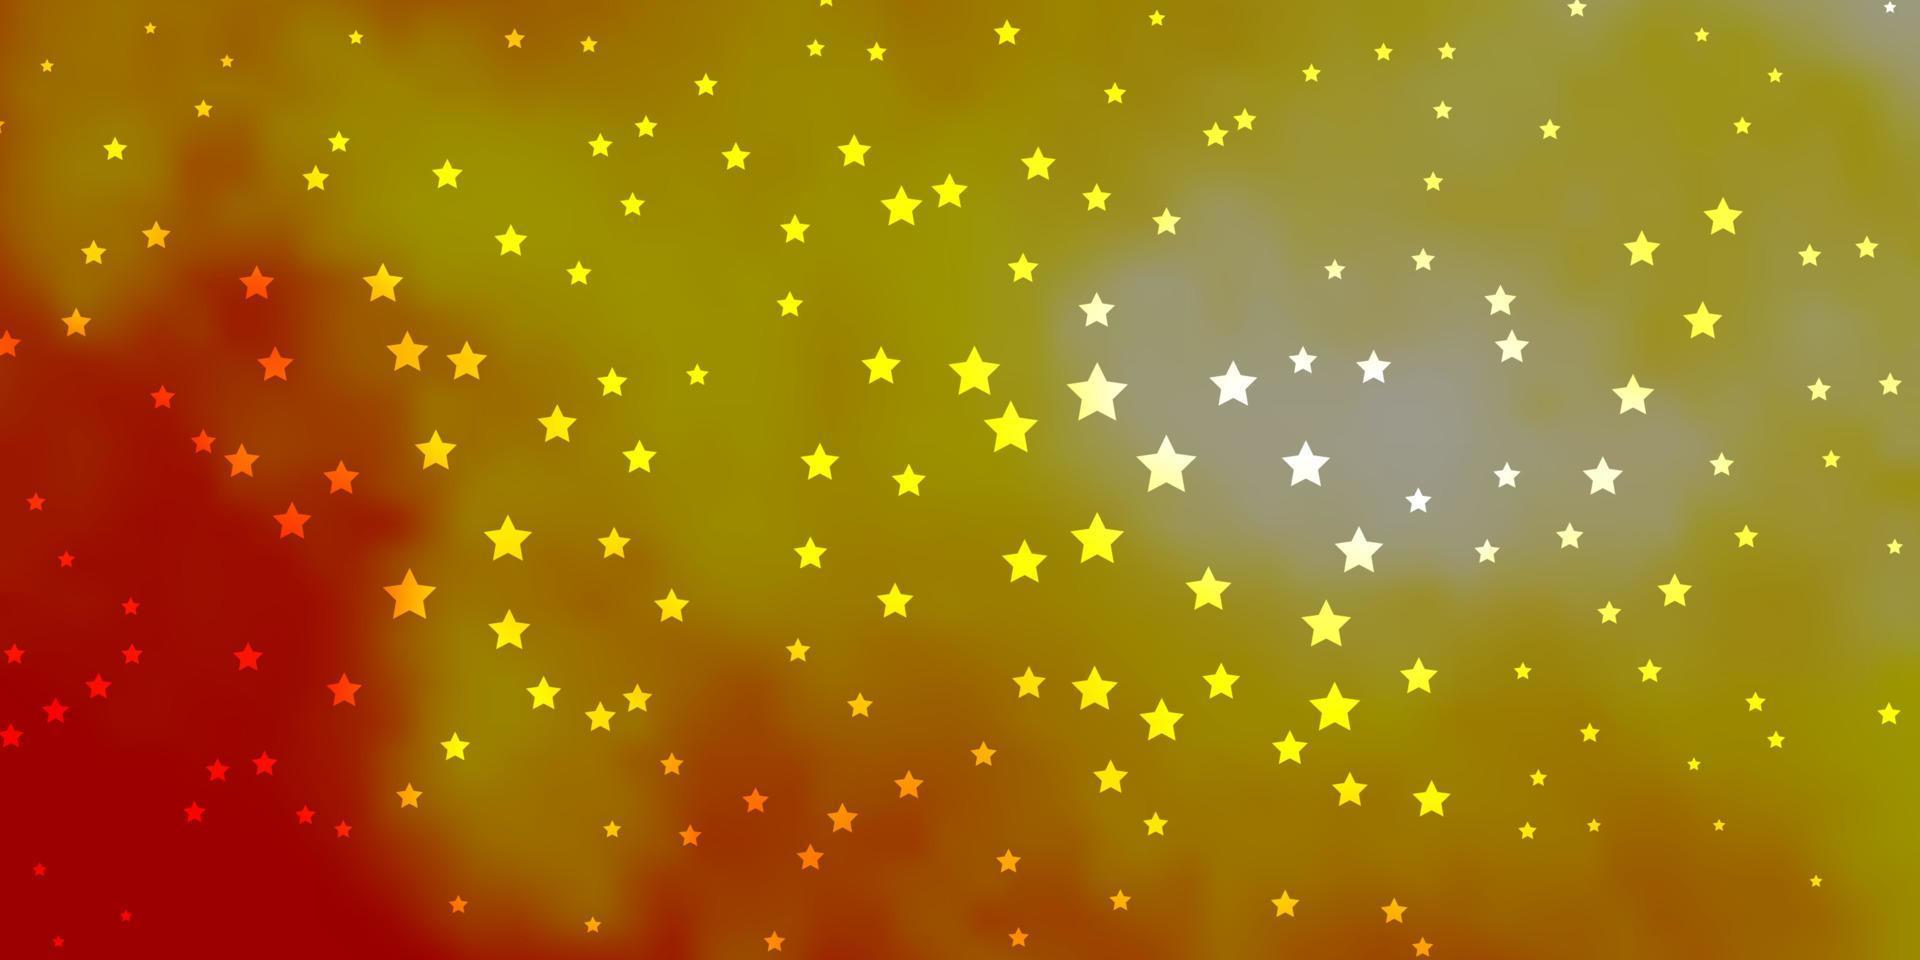 Dark Orange vector template with neon stars.